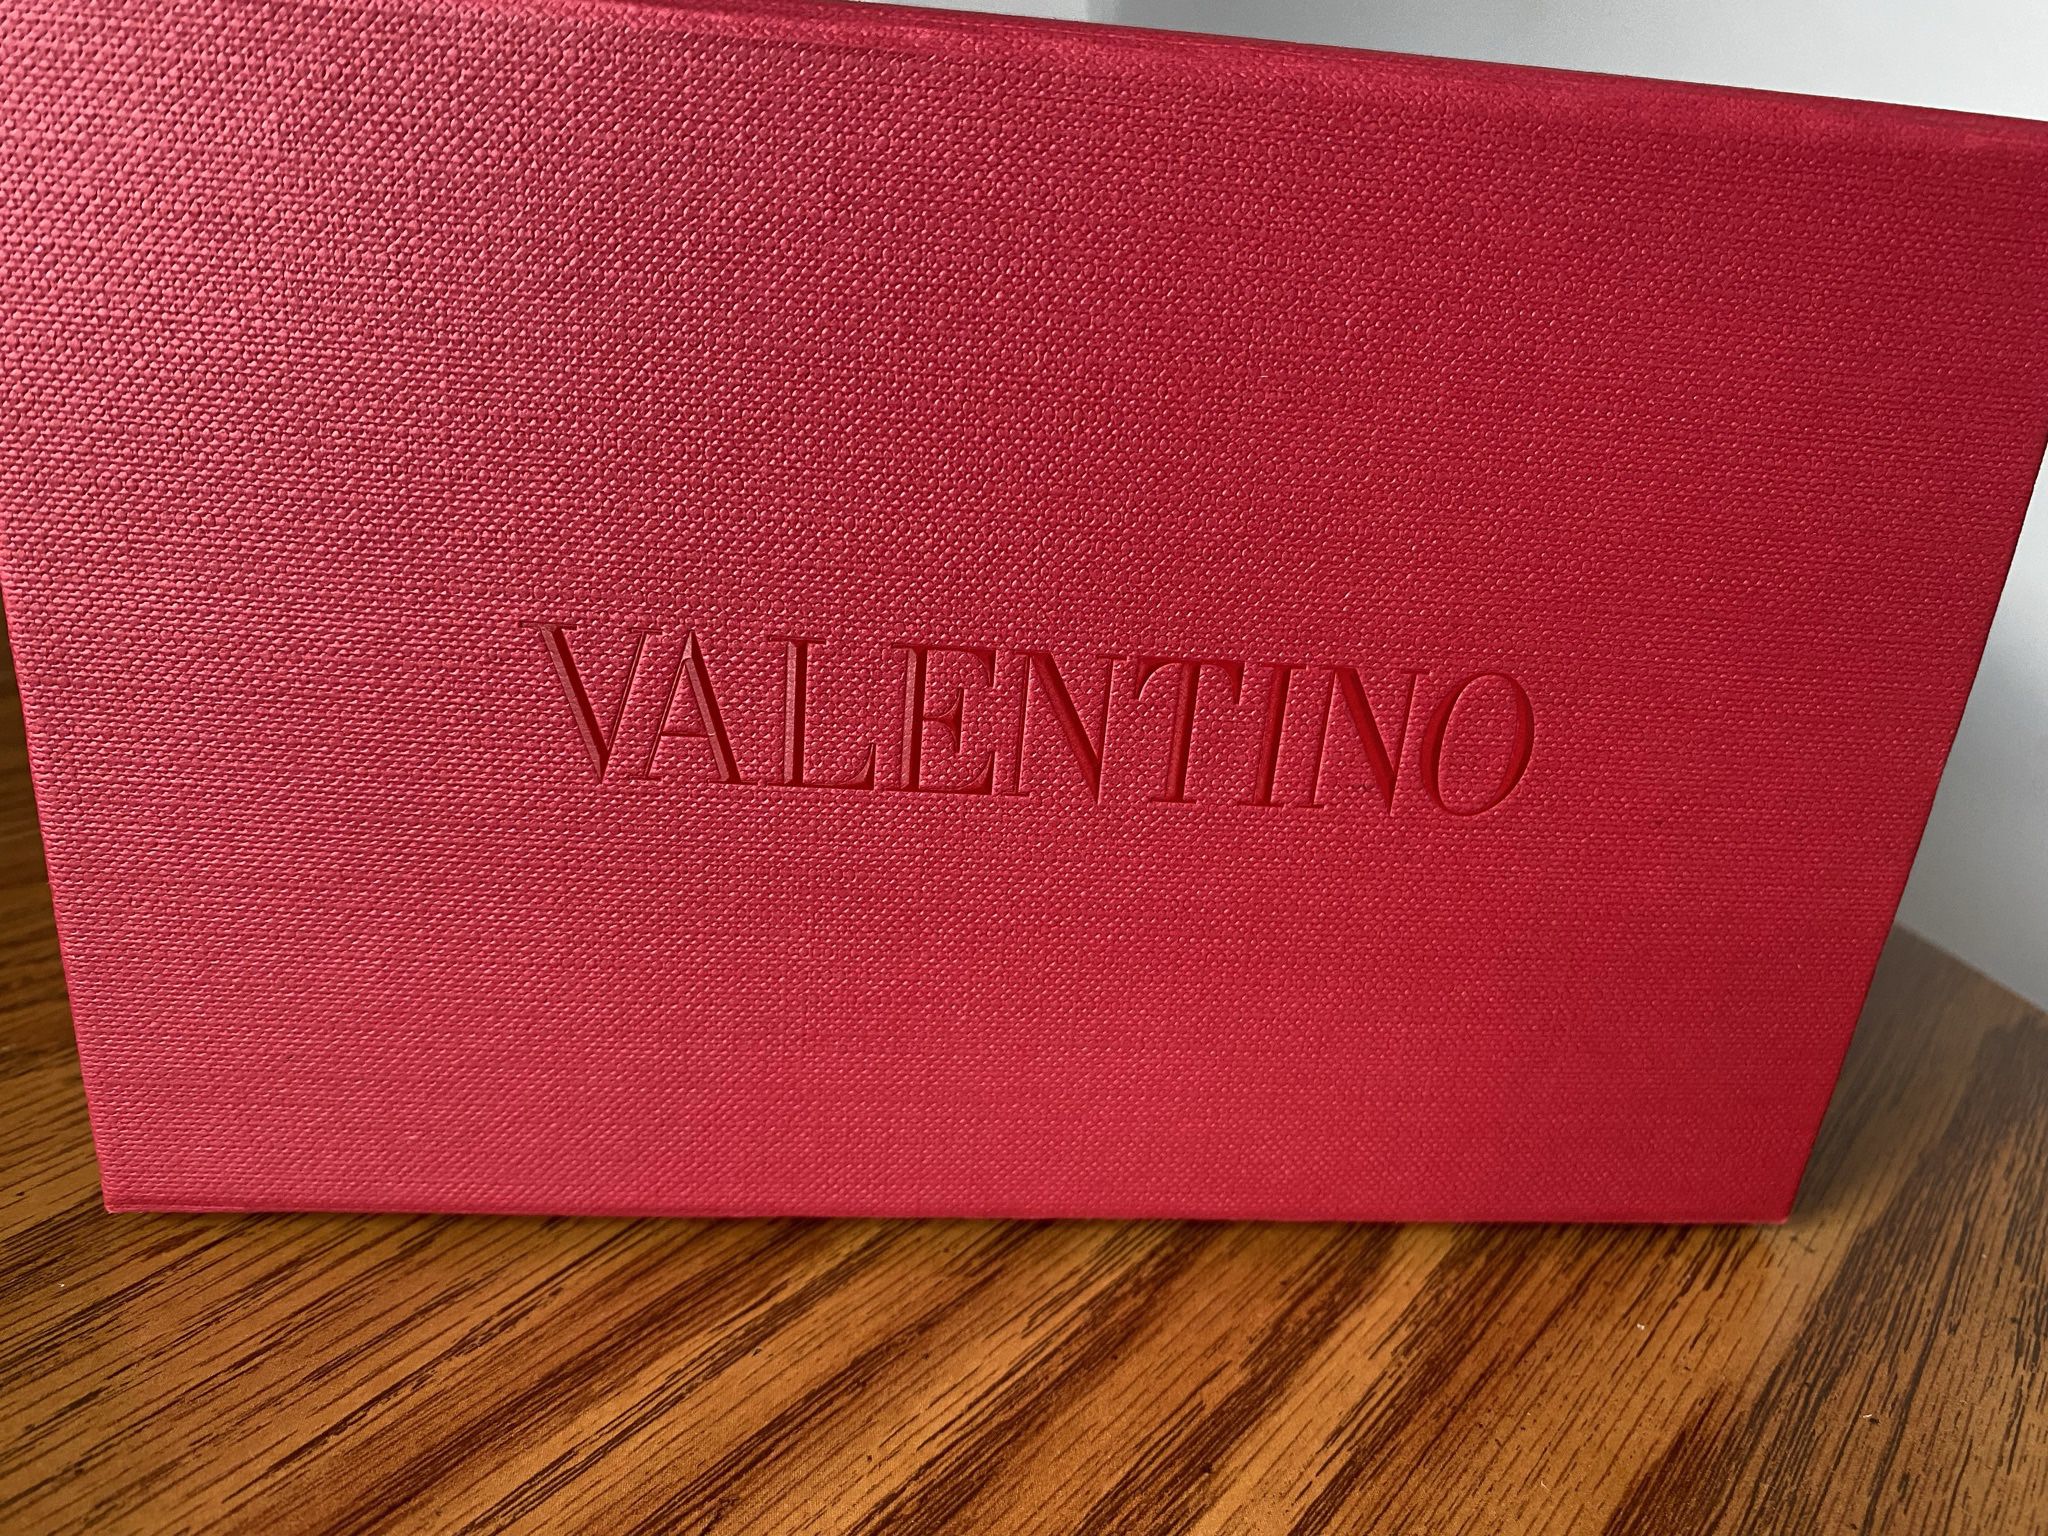 Valentino Travel Size perfume & Highlighter